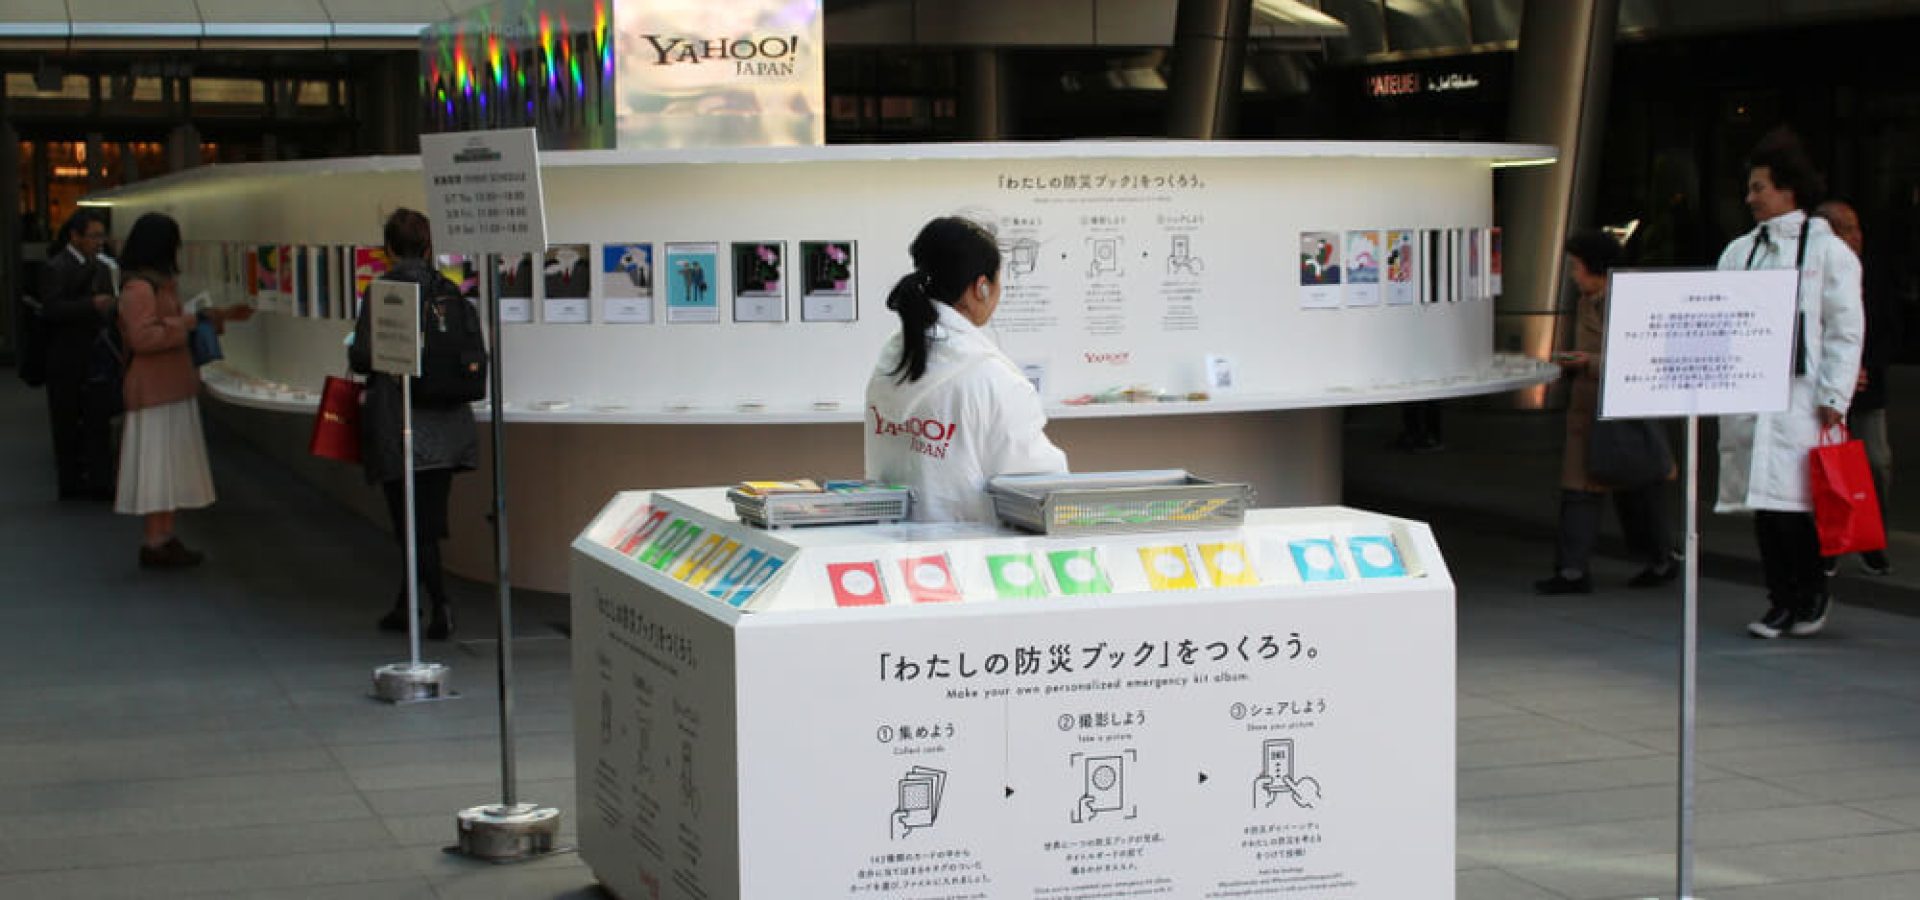 Yahoo Japan: View of Yahoo! Japan's Bosai Diversity